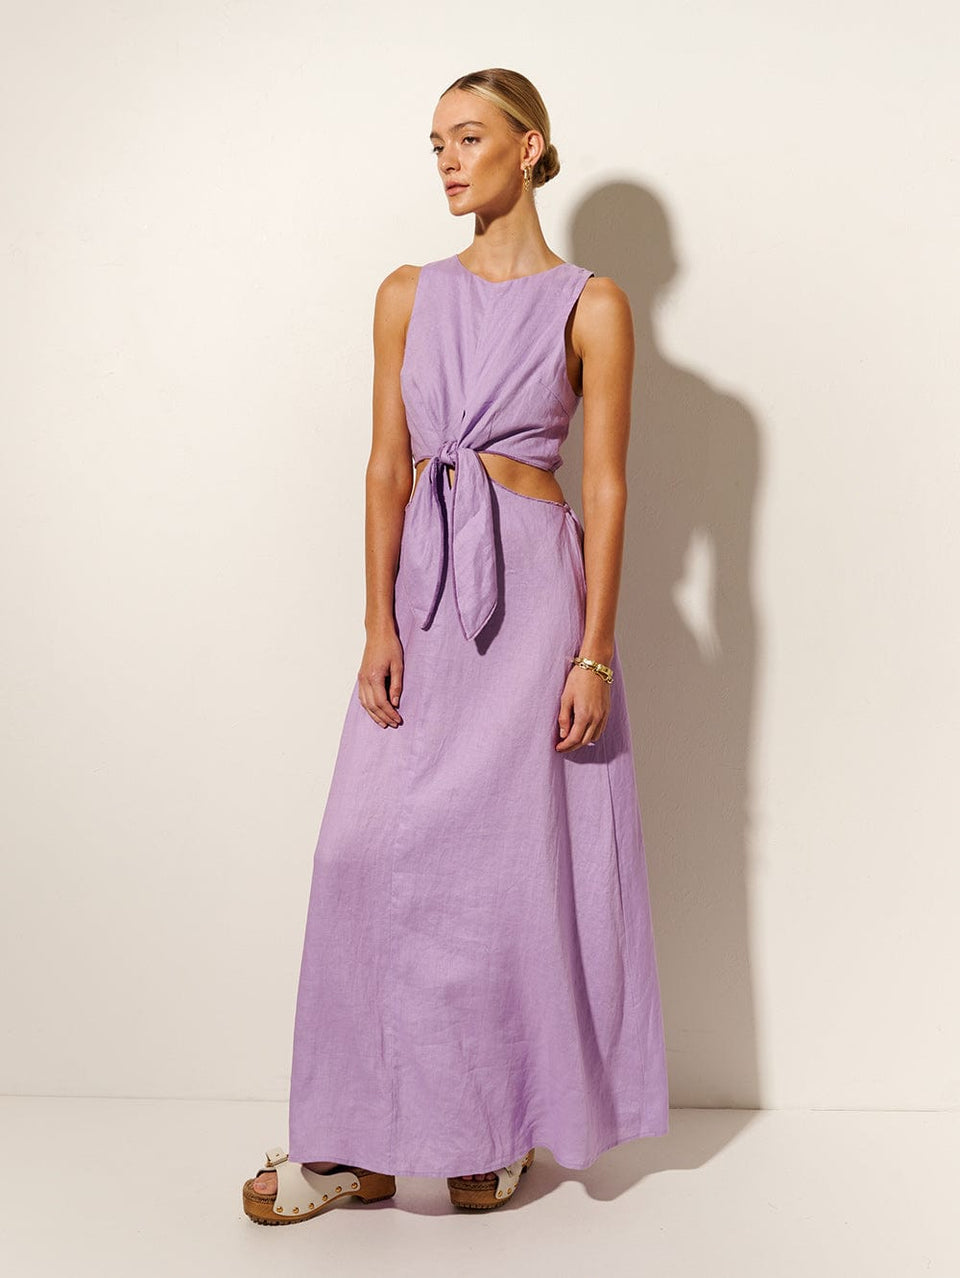 Ellie Cut Out Maxi Dress KIVARI | Model wears purple cut out maxi dress side view